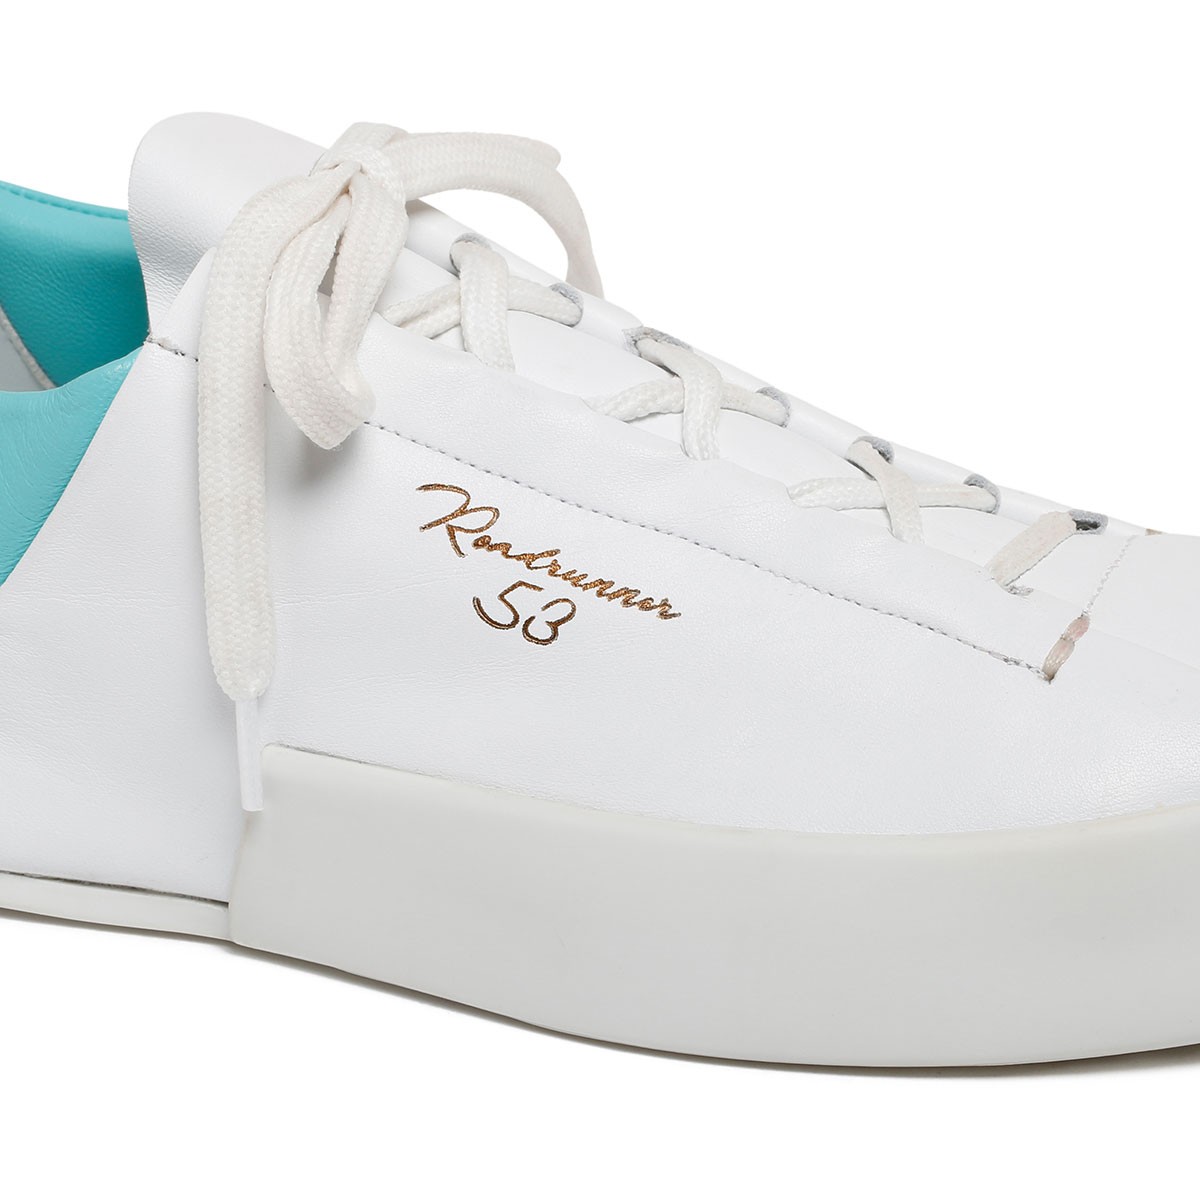 Fantoni white and aquamarine sneakers